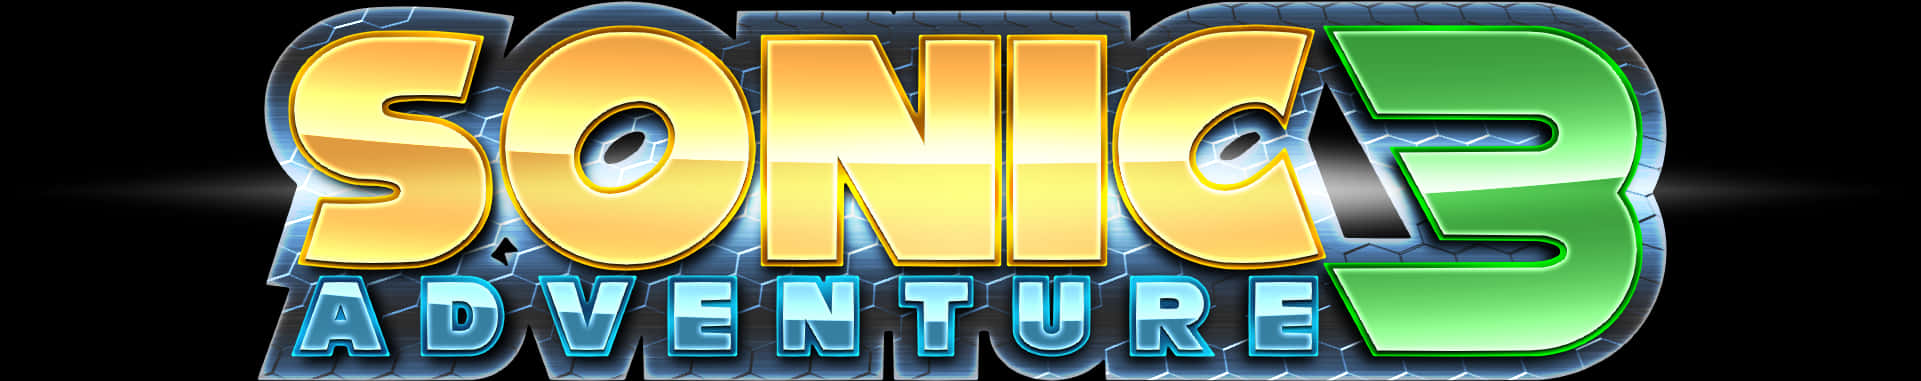 Sonic Adventure3 Logo PNG image